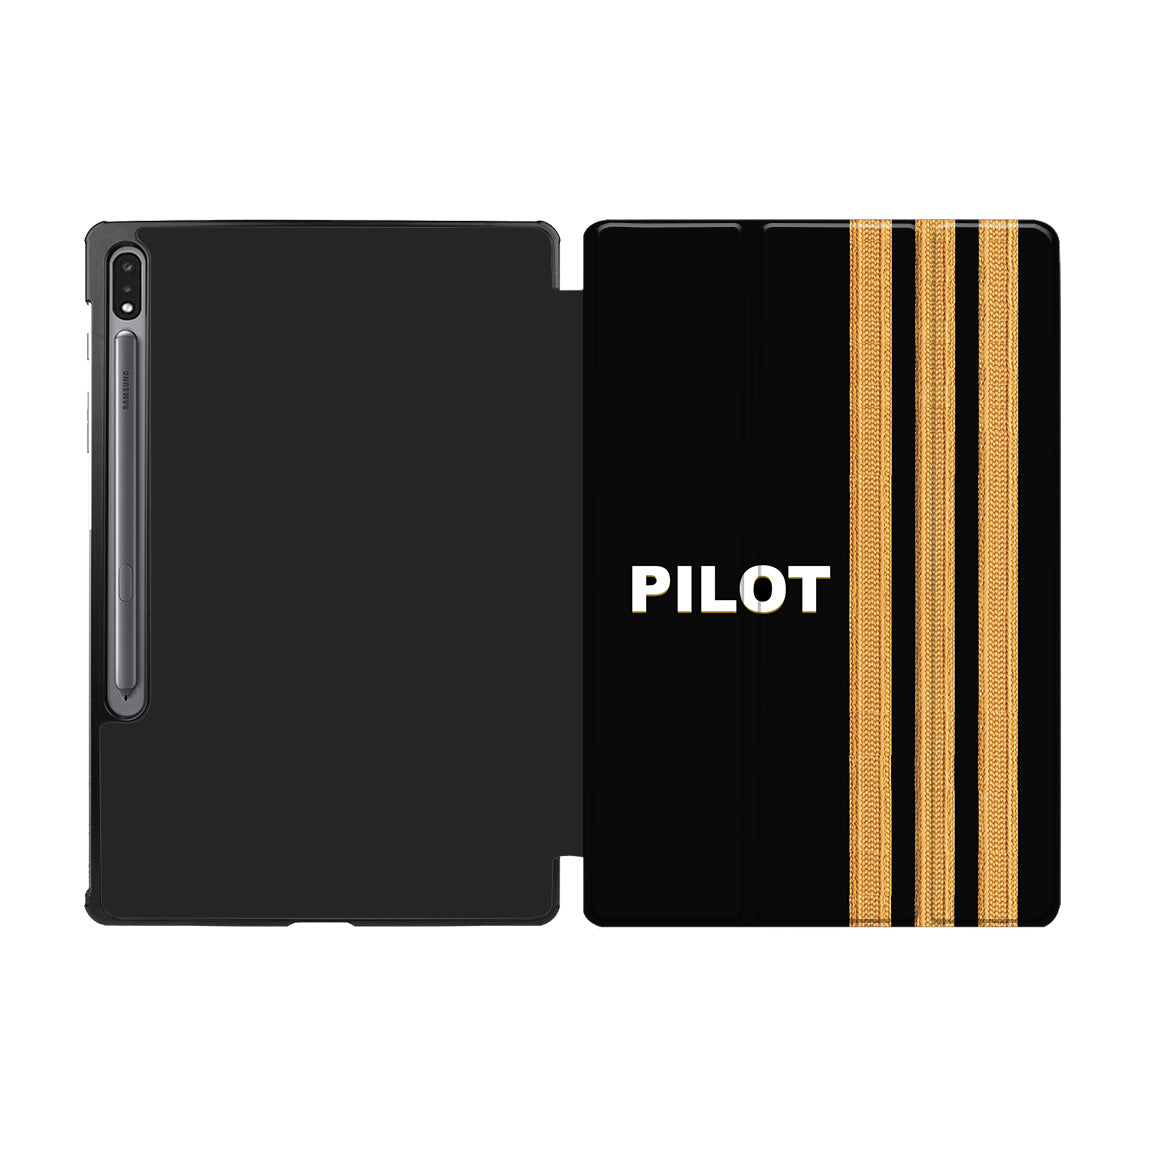 Pilot & Epaulettes (3 Lines) Designed Samsung Tablet Cases